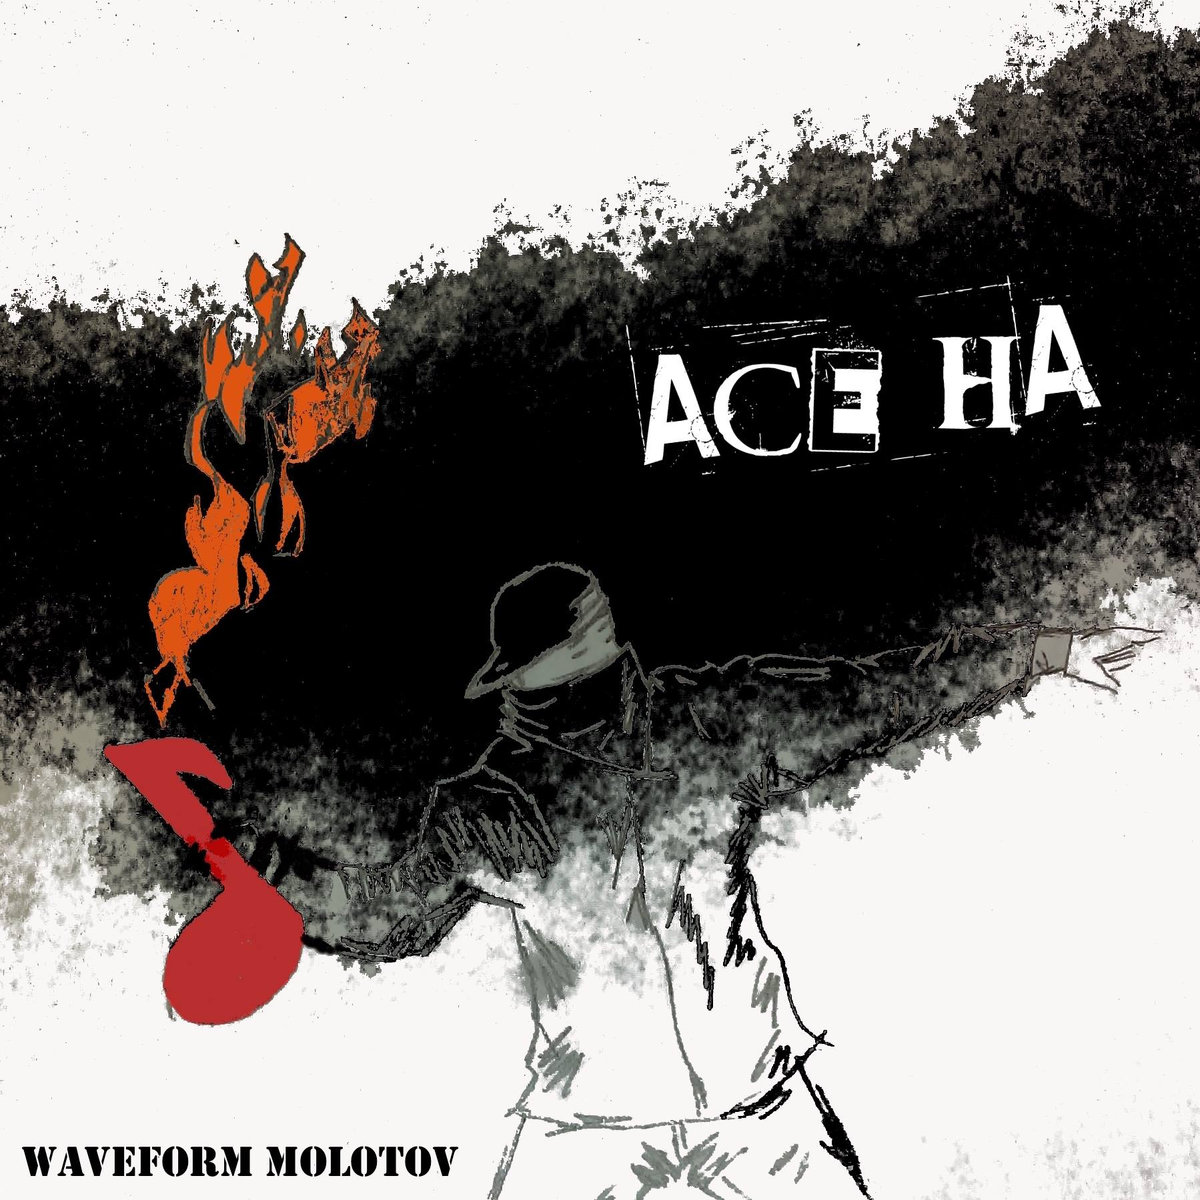 Ace Ha - "Waveform Molotov" (Release)